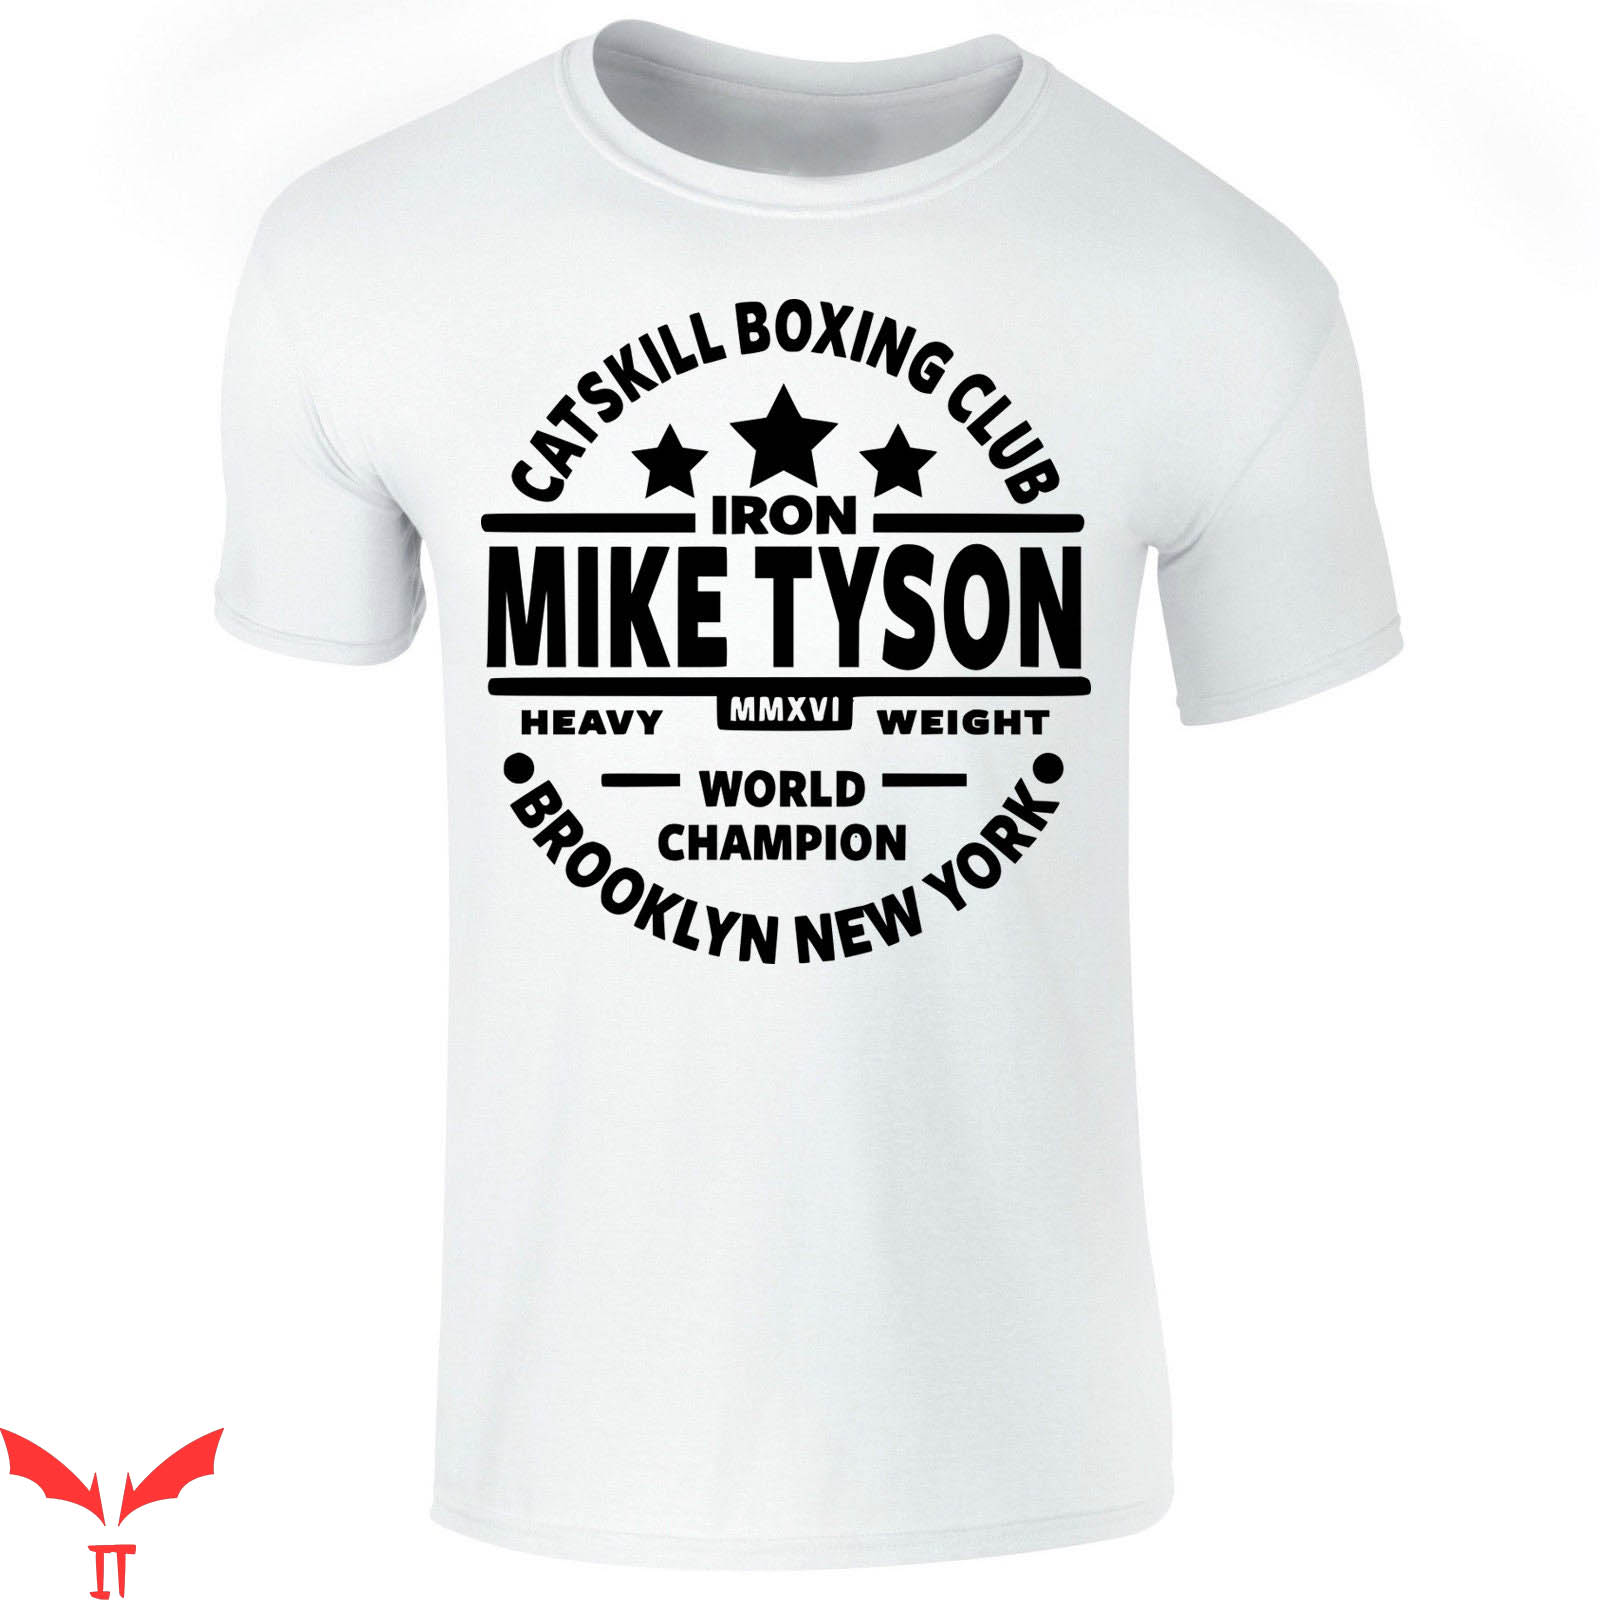 Mike Tyson Vintage T-Shirt Boxing Fan Mike Tyson Catskill